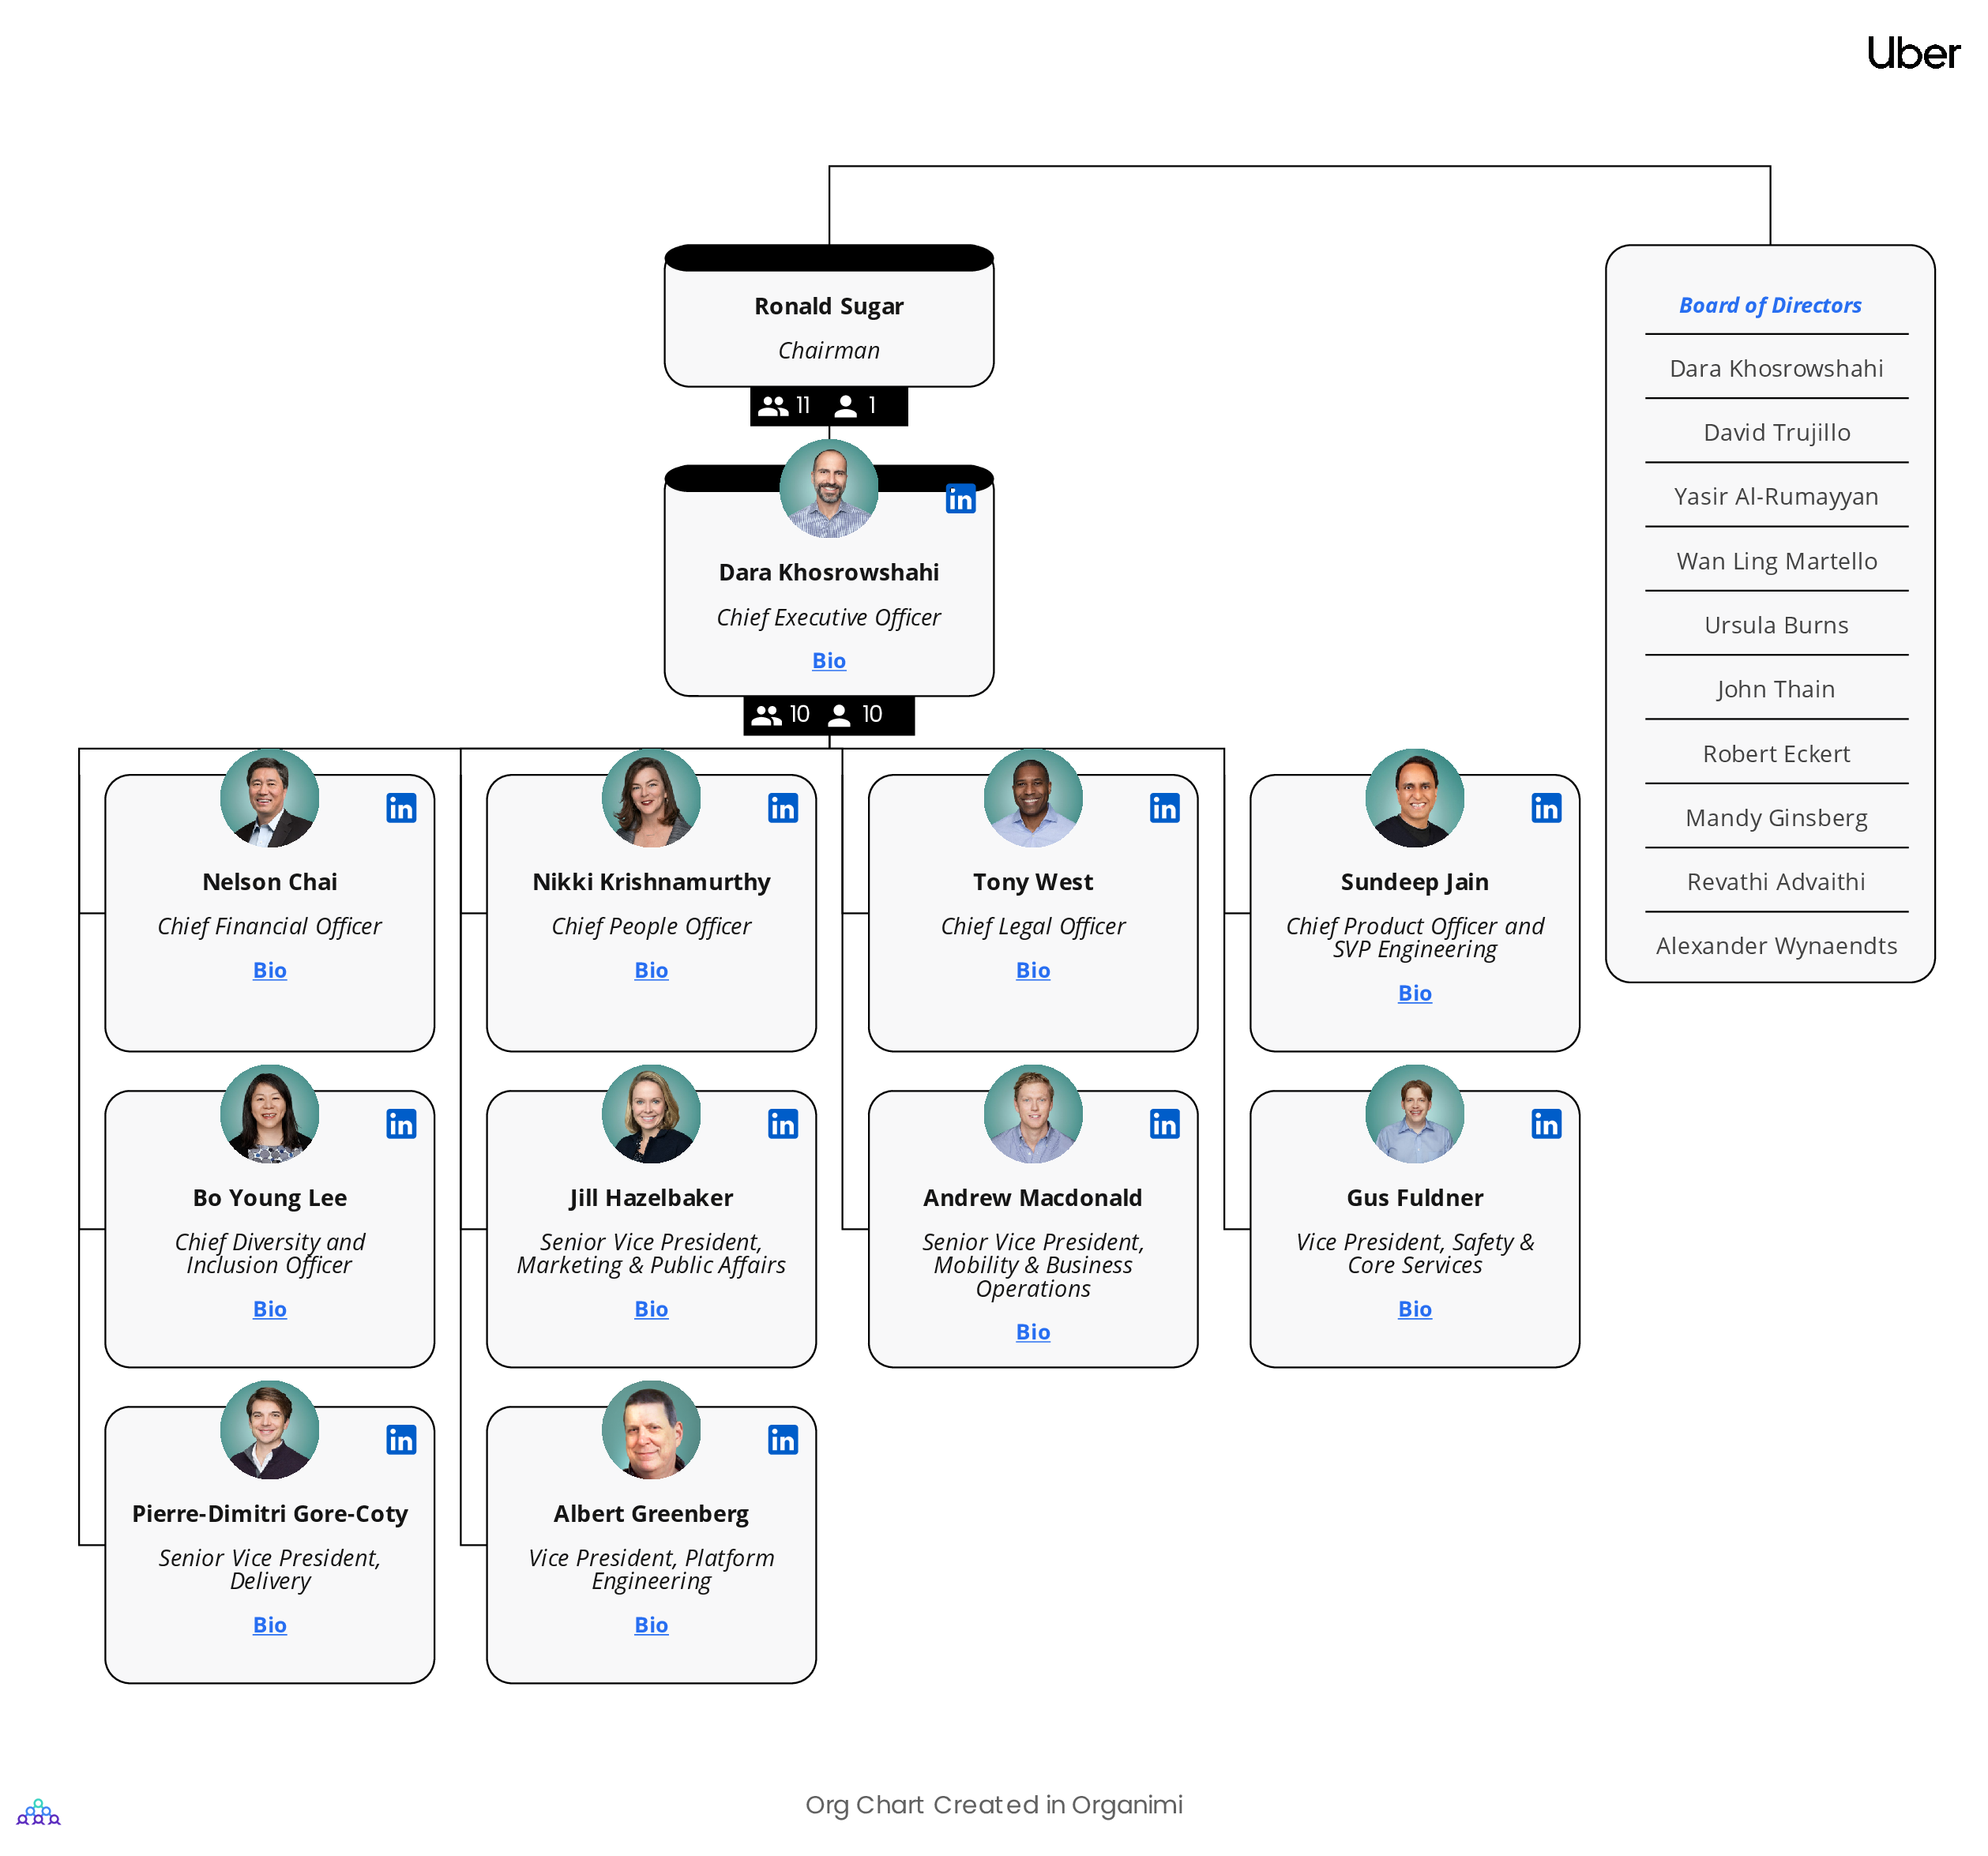 Uber's Organizational Structure [Interactive Chart] | Organimi